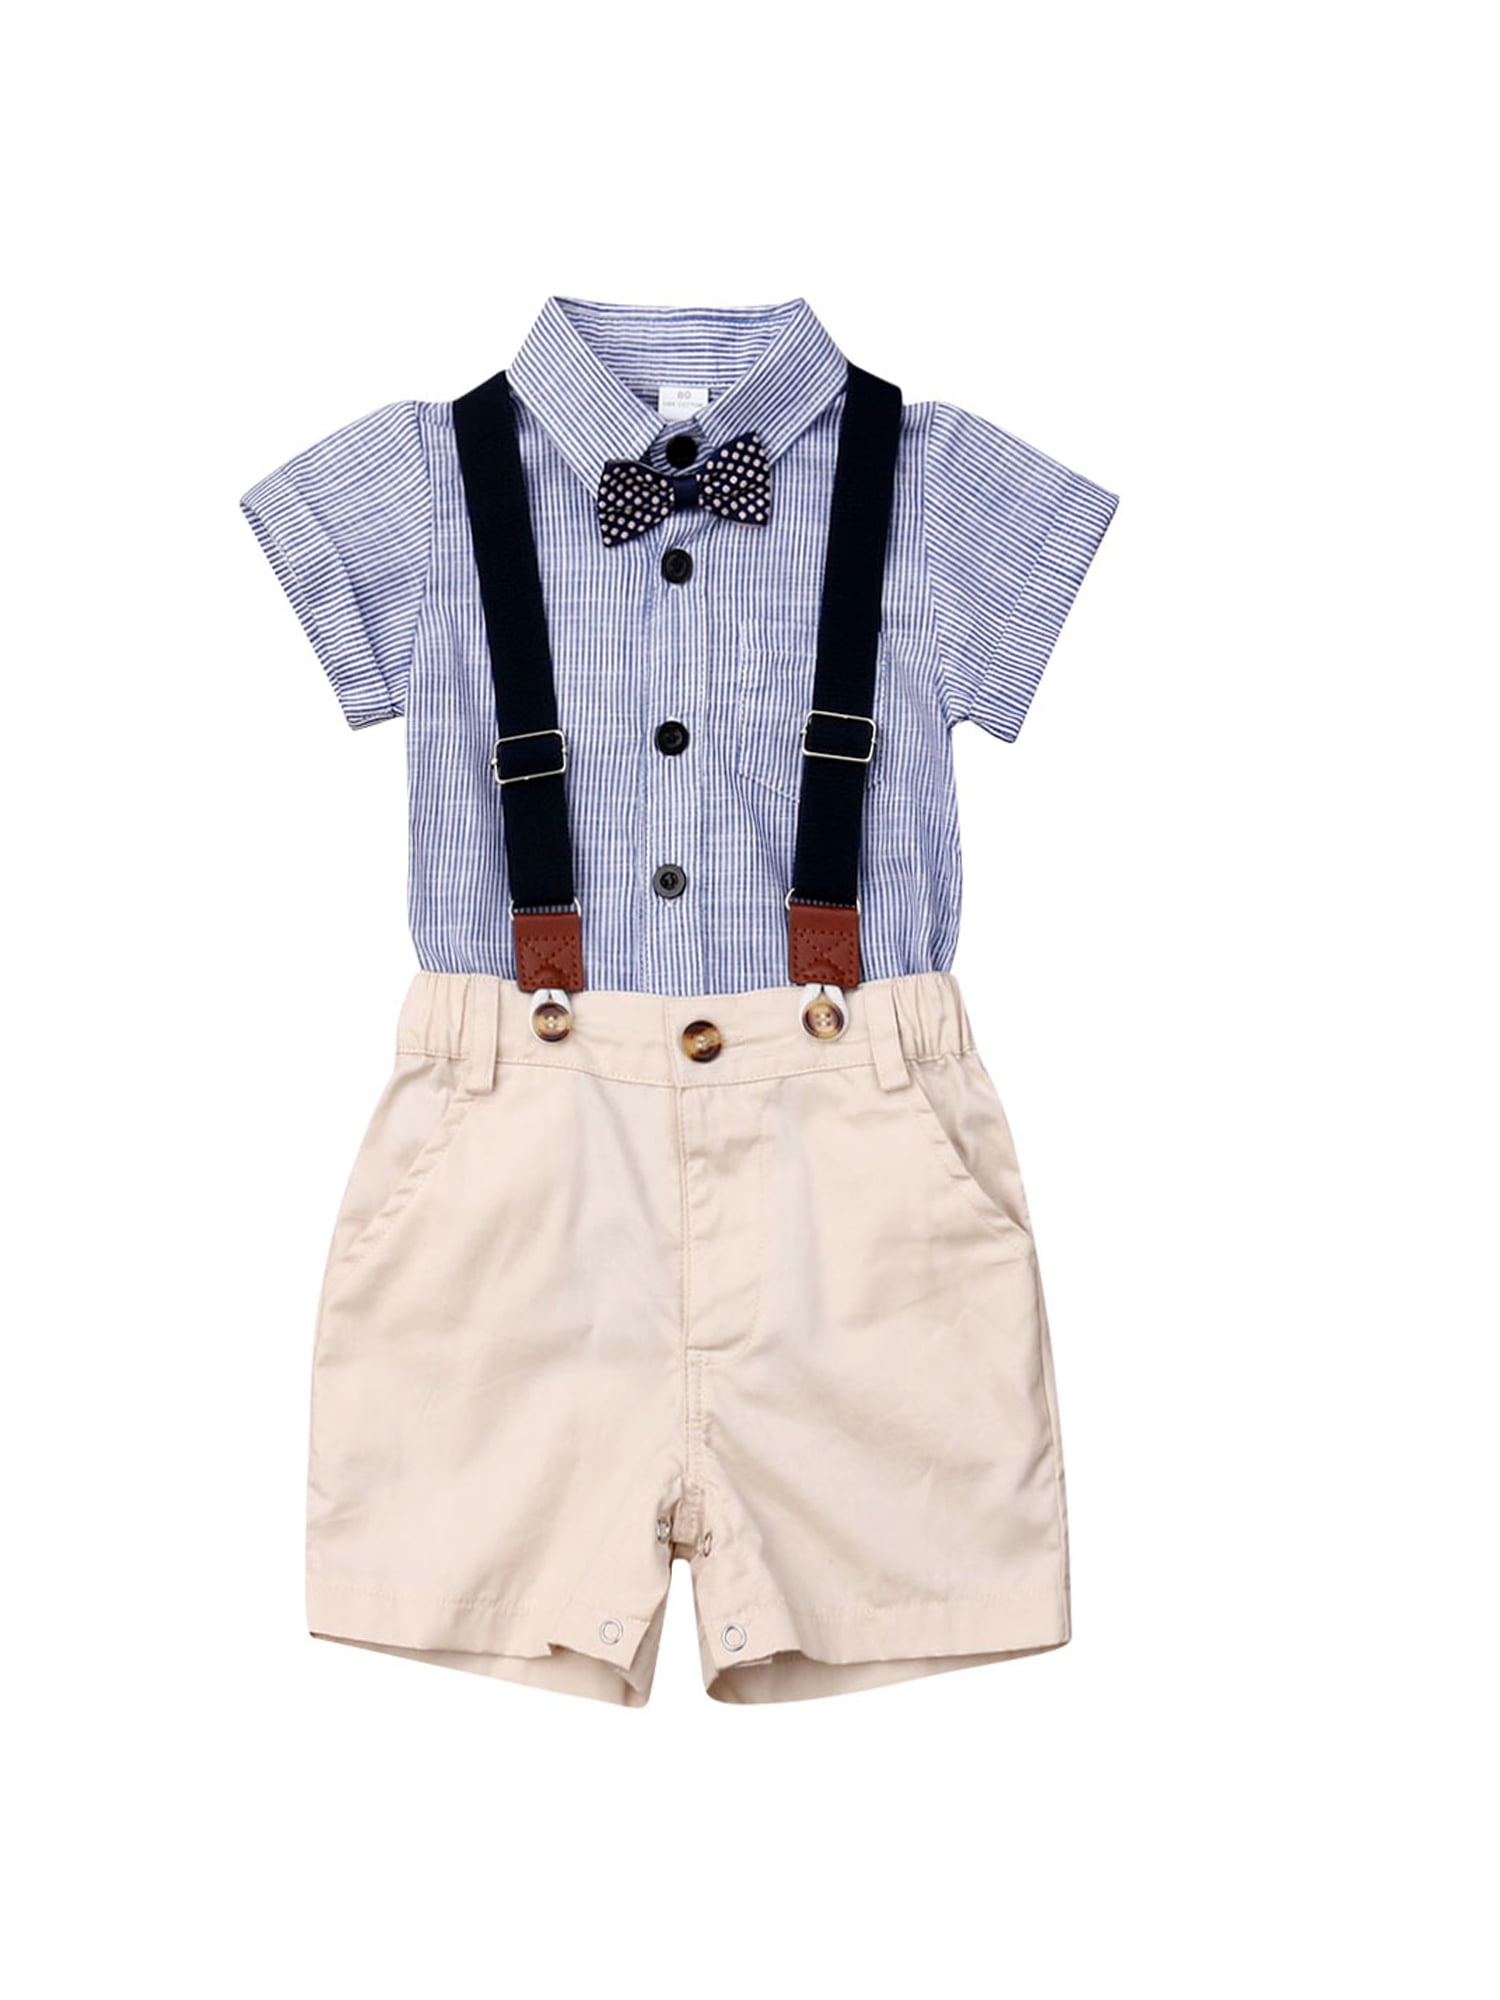 Toddler Baby Boy Gentleman Outfit Bowtie Romper Shirt Suspender Pants Shorts Set 